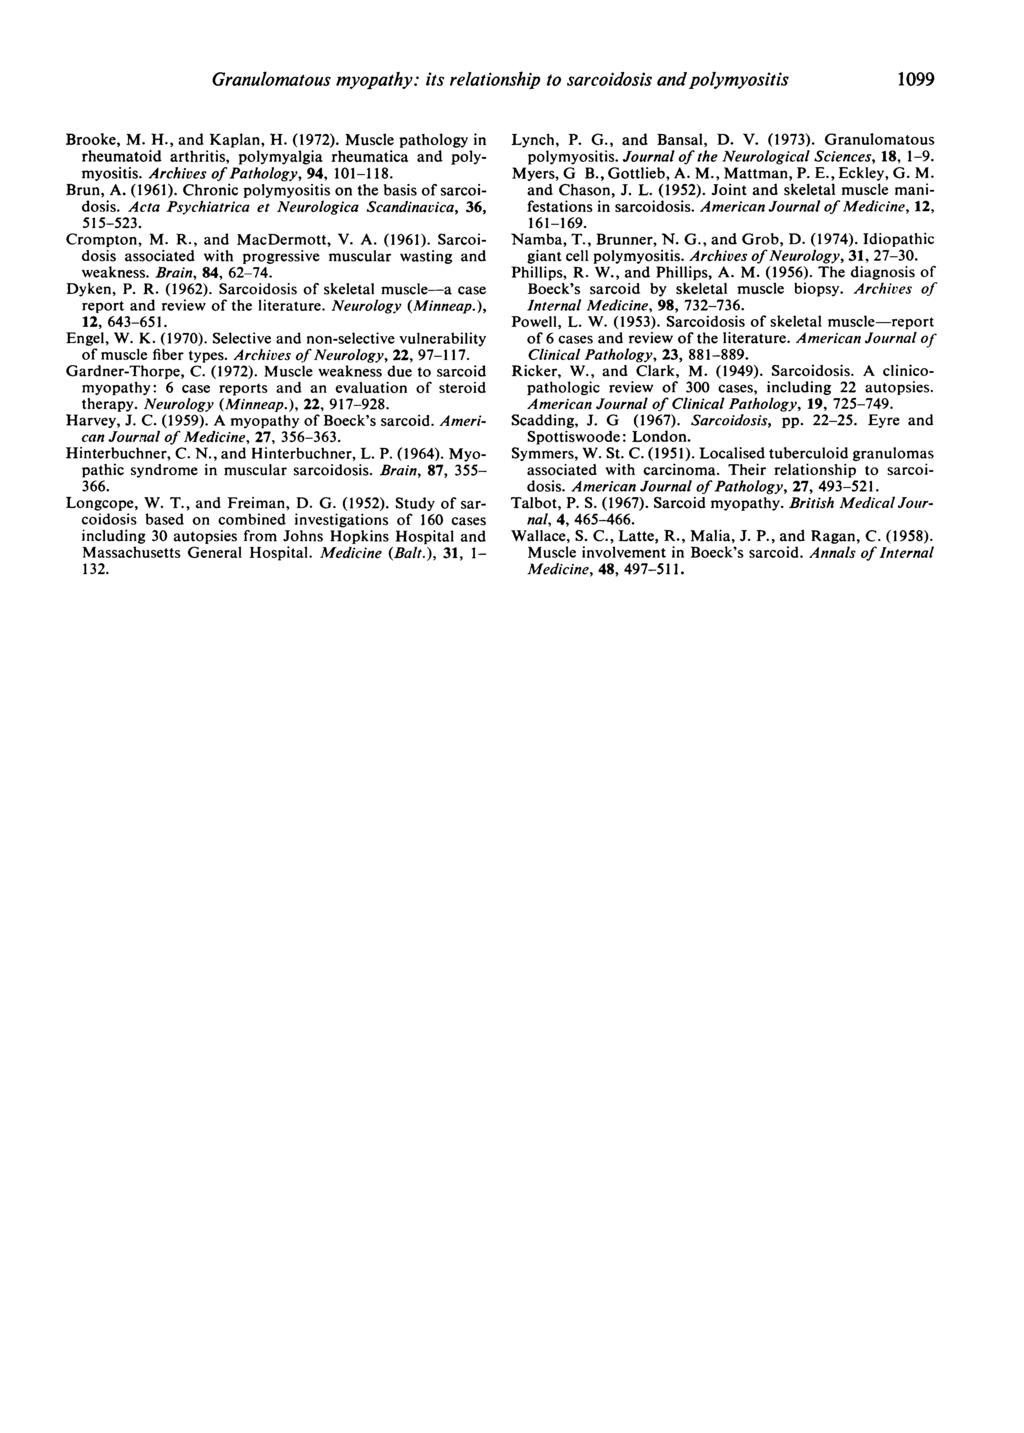 Granulomatous myopathy: its relationship to sarcoidosis andpolymyositis Brooke, M. H., and Kaplan, H. (1972). Muscle pathology in rheumatoid arthritis, polymyalgia rheumatica and polymyositis.